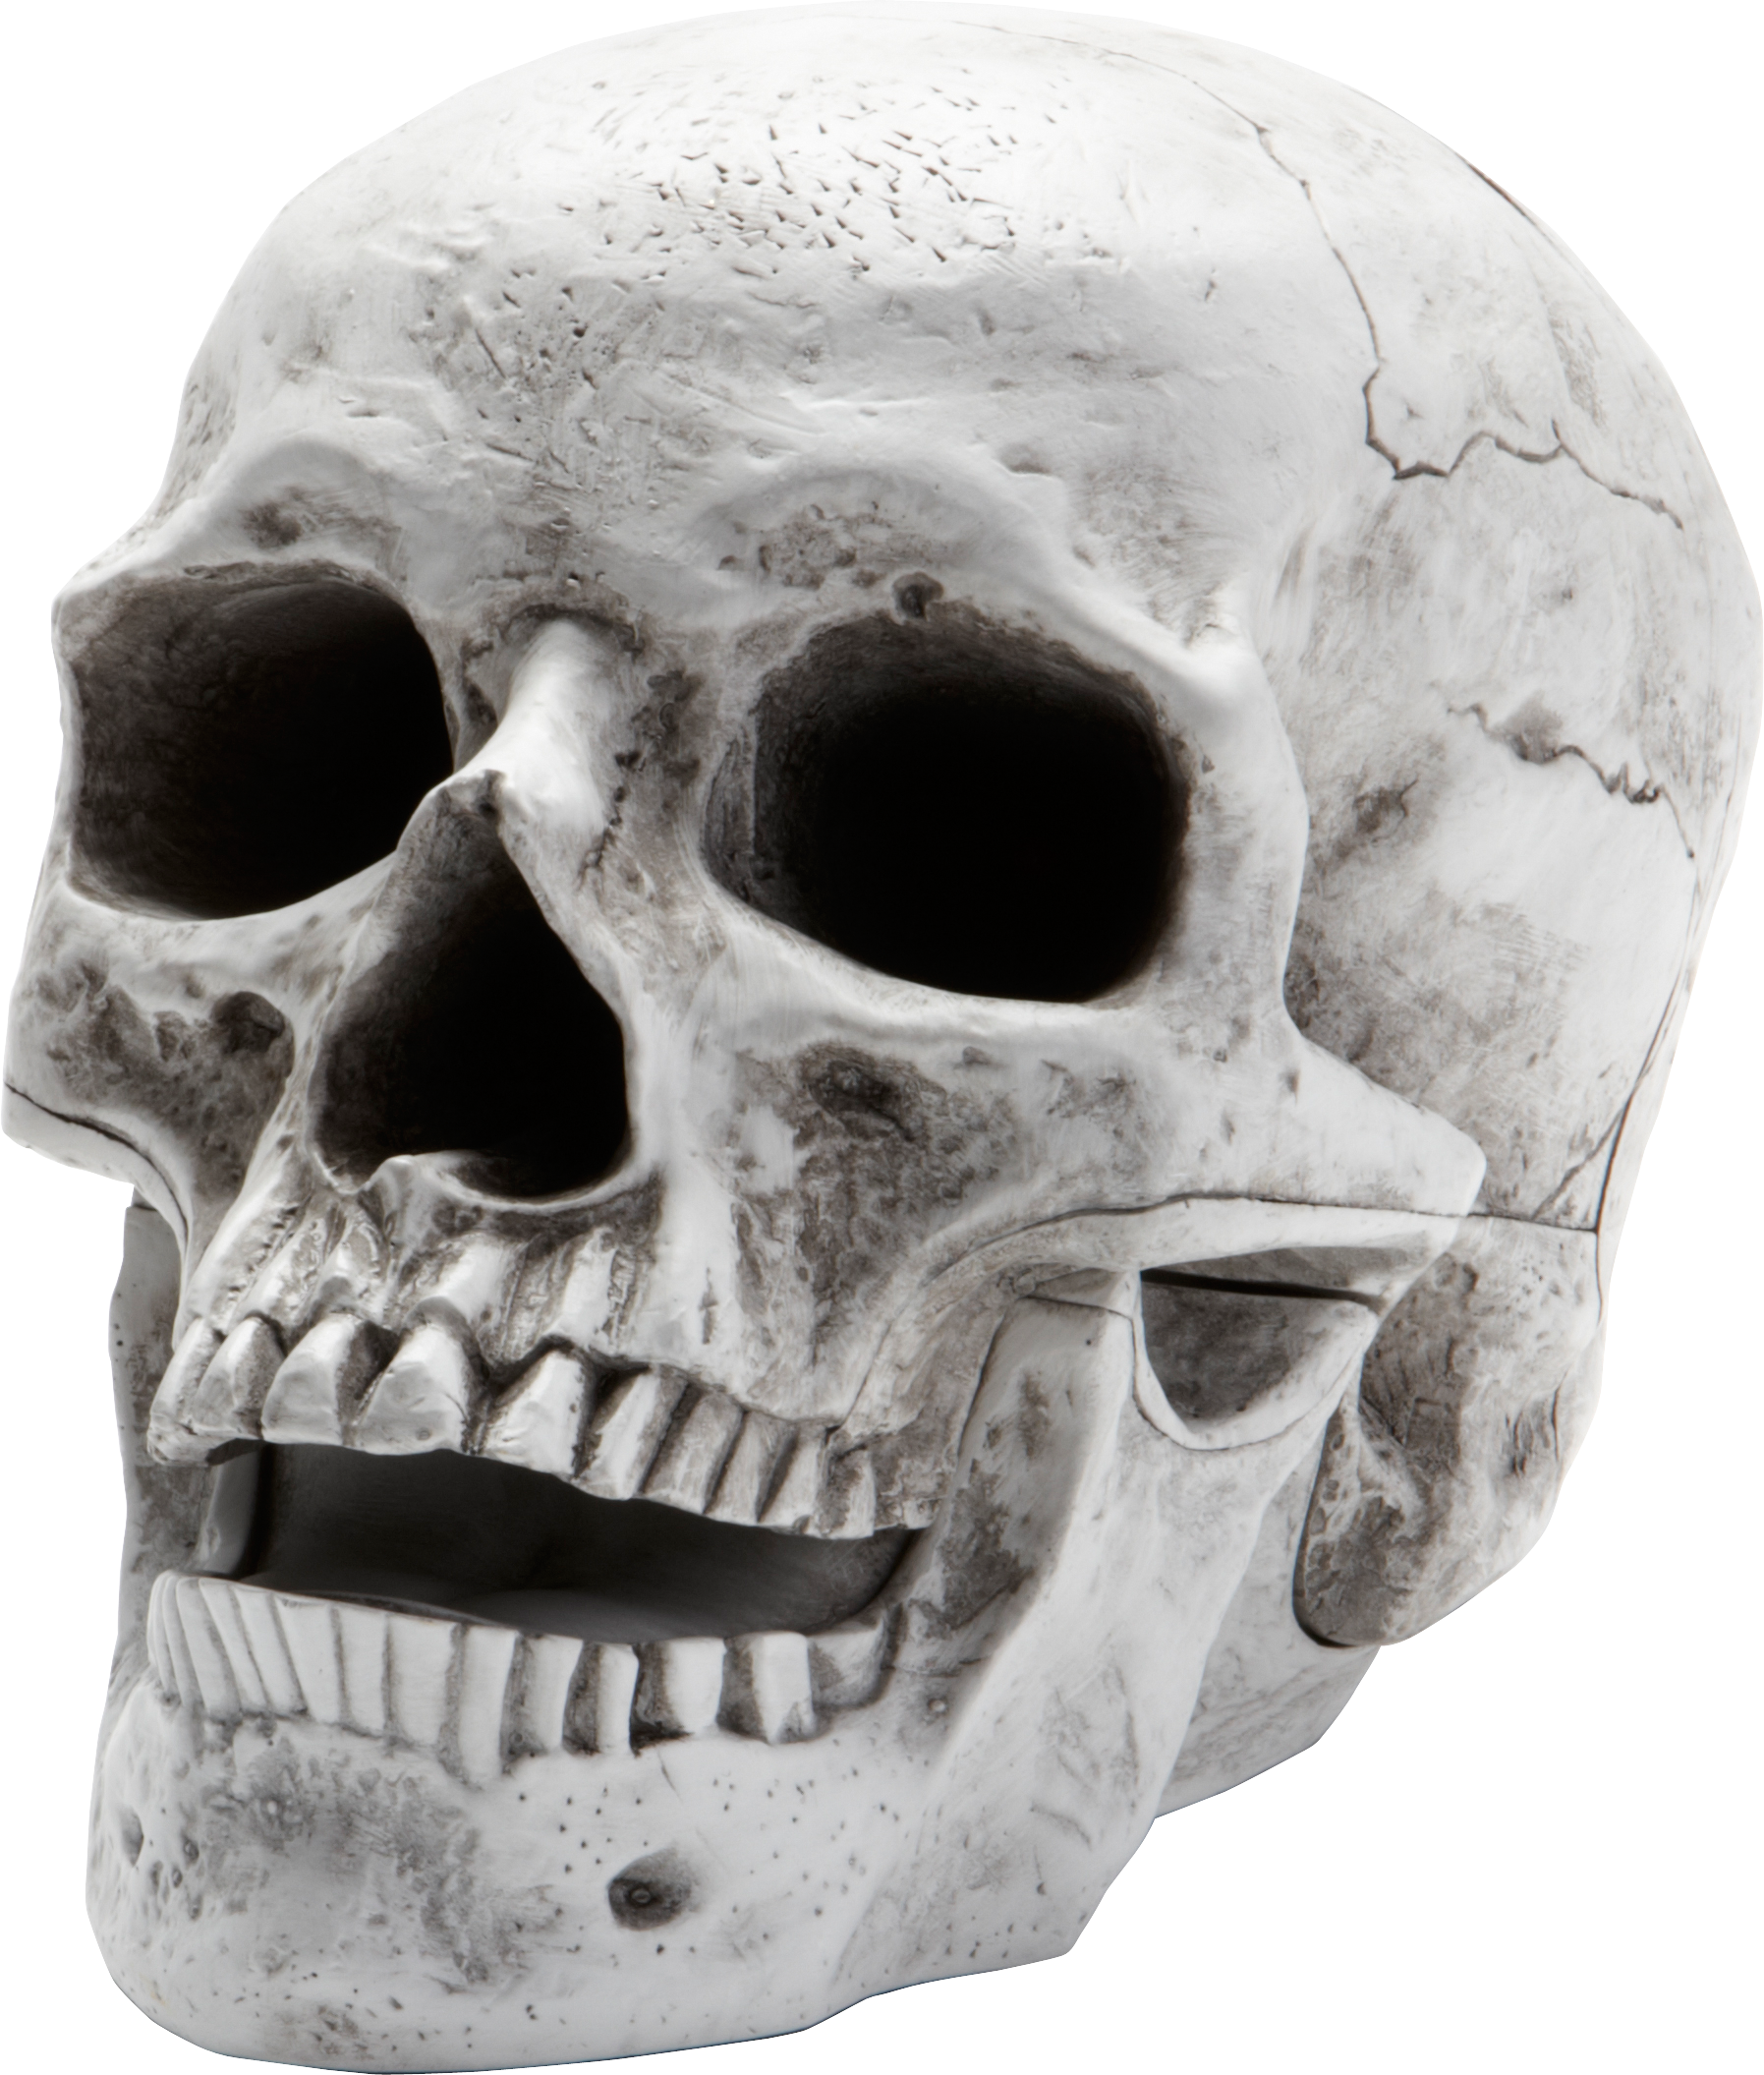 Girl Skull PNG HD - 125418